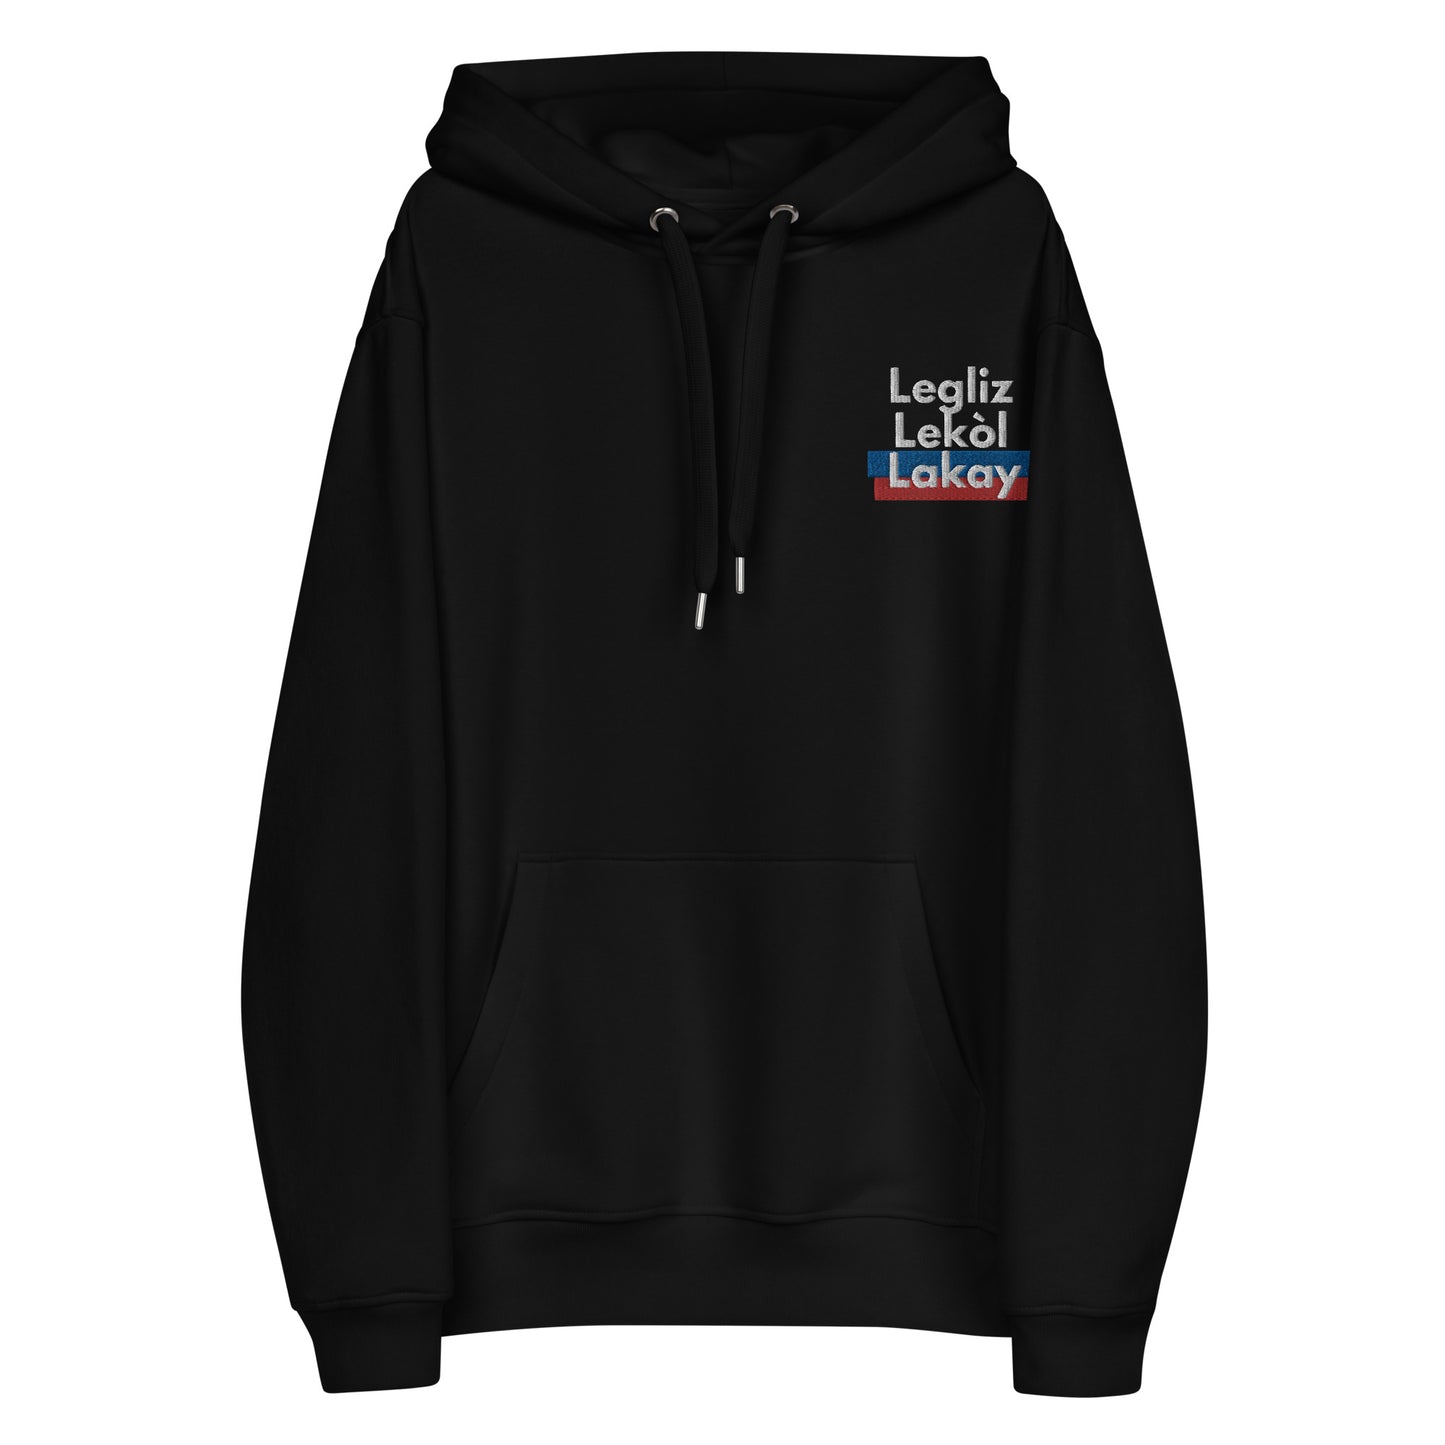 Legliz lekol Lakay  Embroidery hoodie